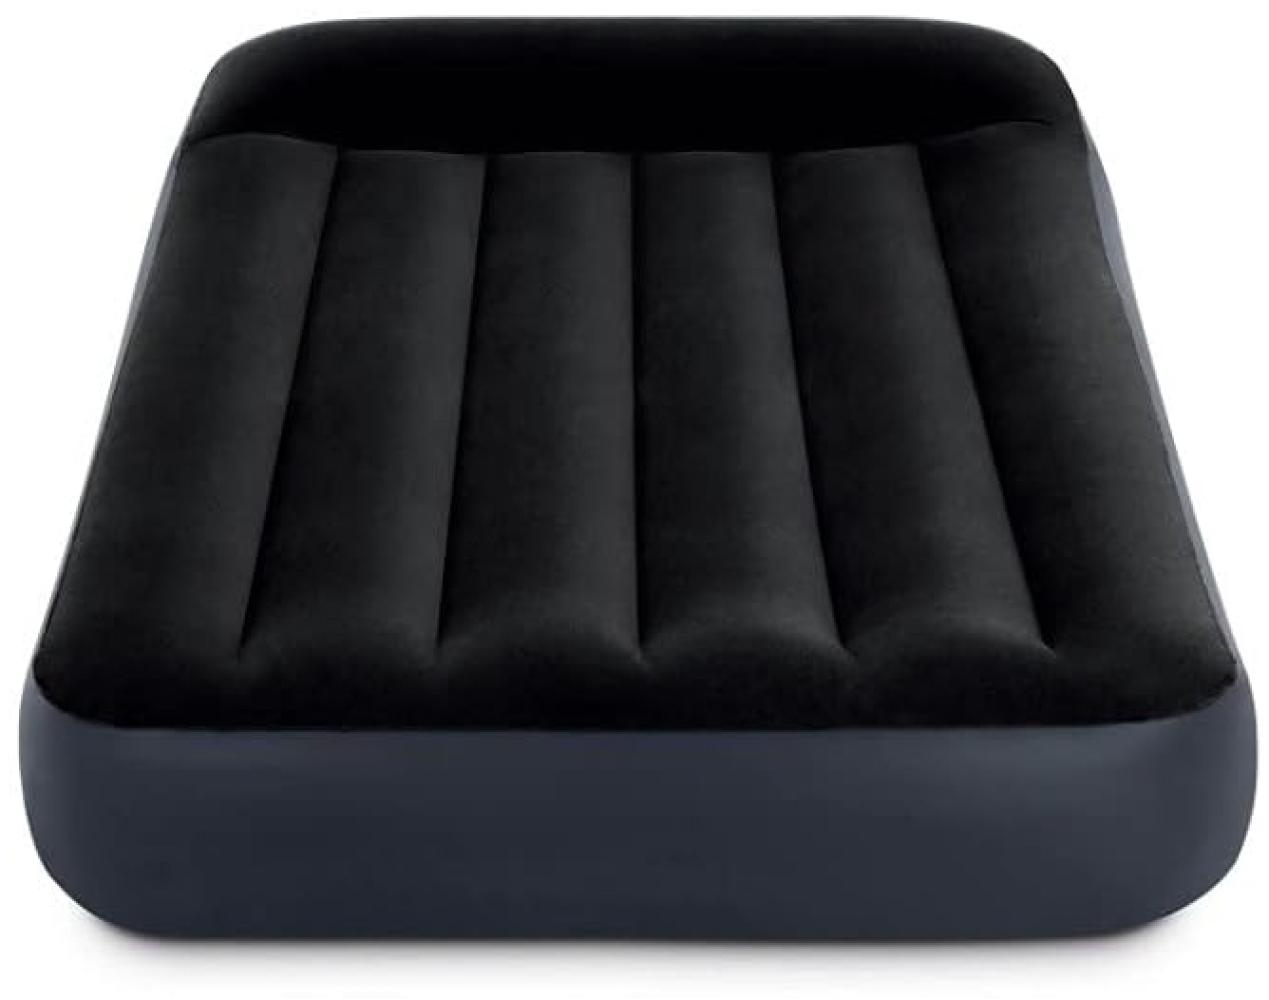 Intex 'Standard Pillow Rest Classic' Luftmatratze, schwarz, 25 x 191 x 99 cm Bild 1